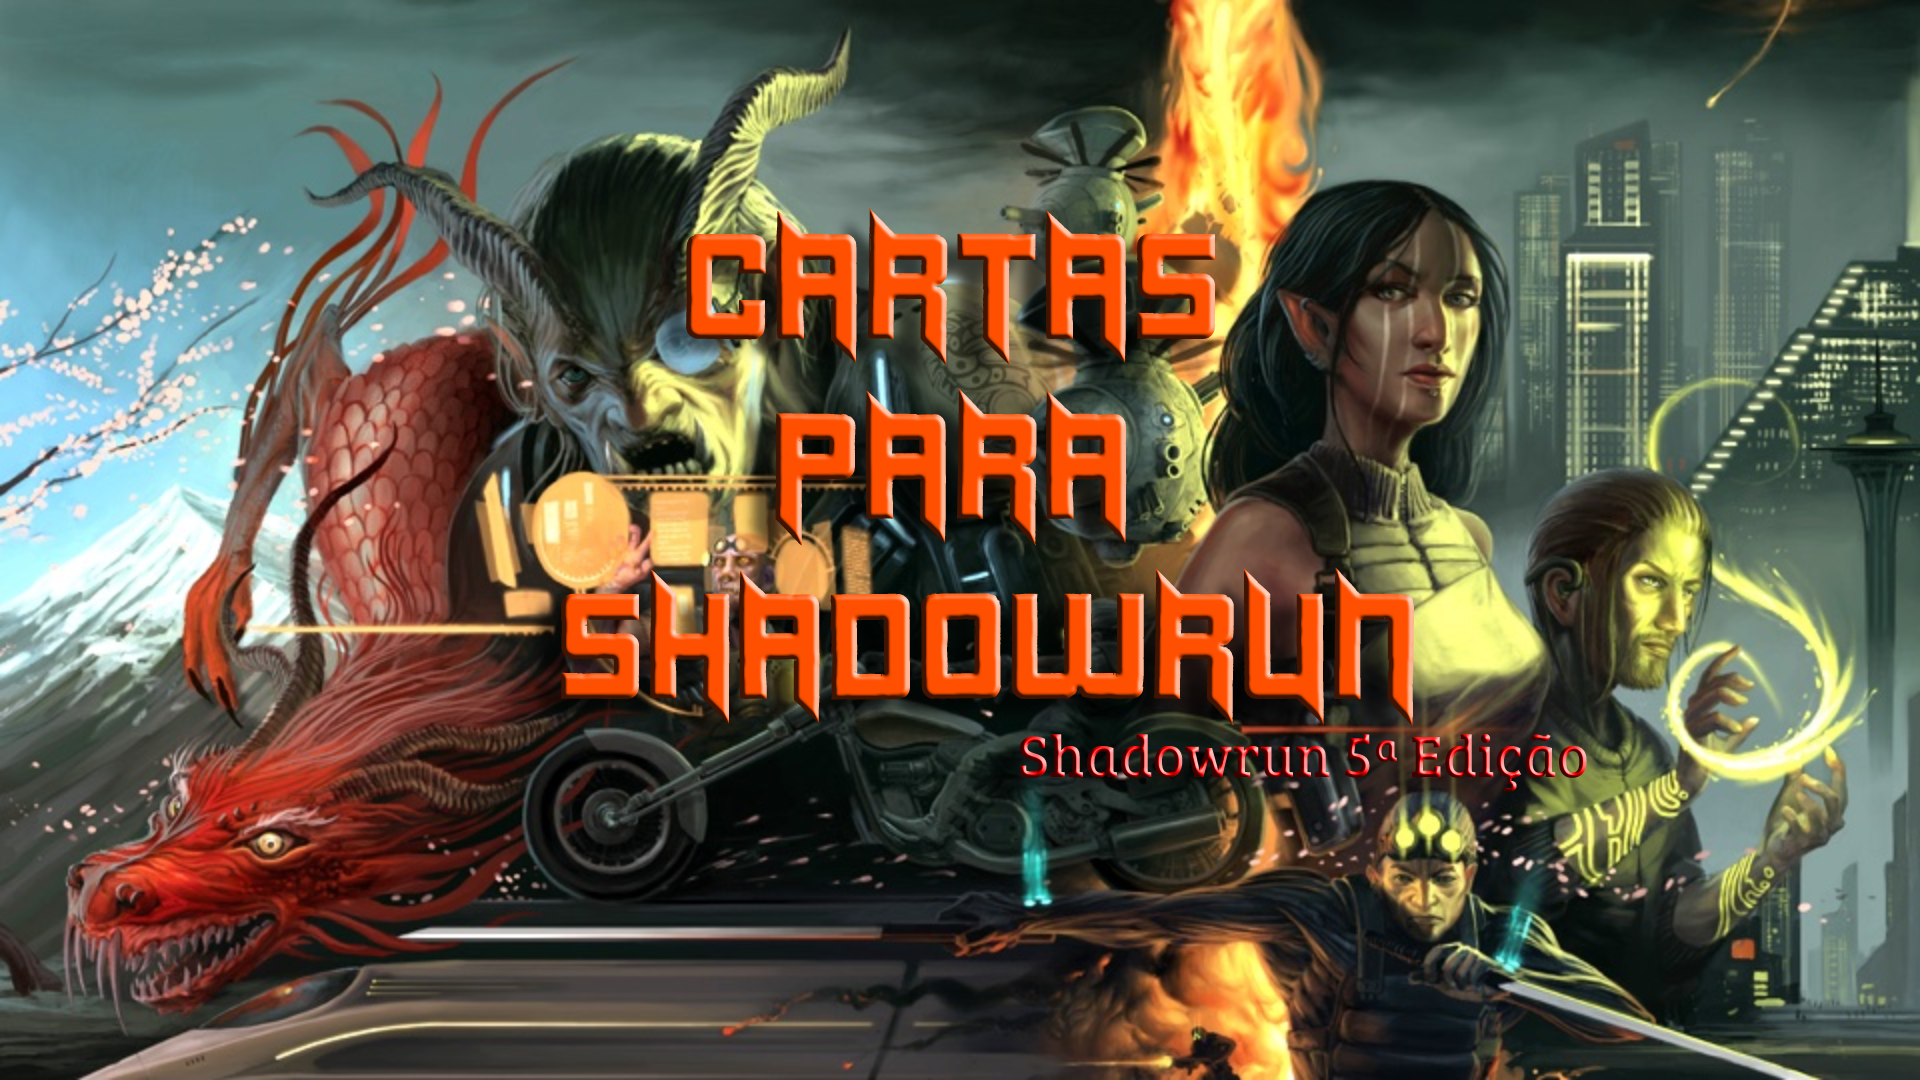 Shadowrun Sexto Mundo - Resenha - Movimento RPG